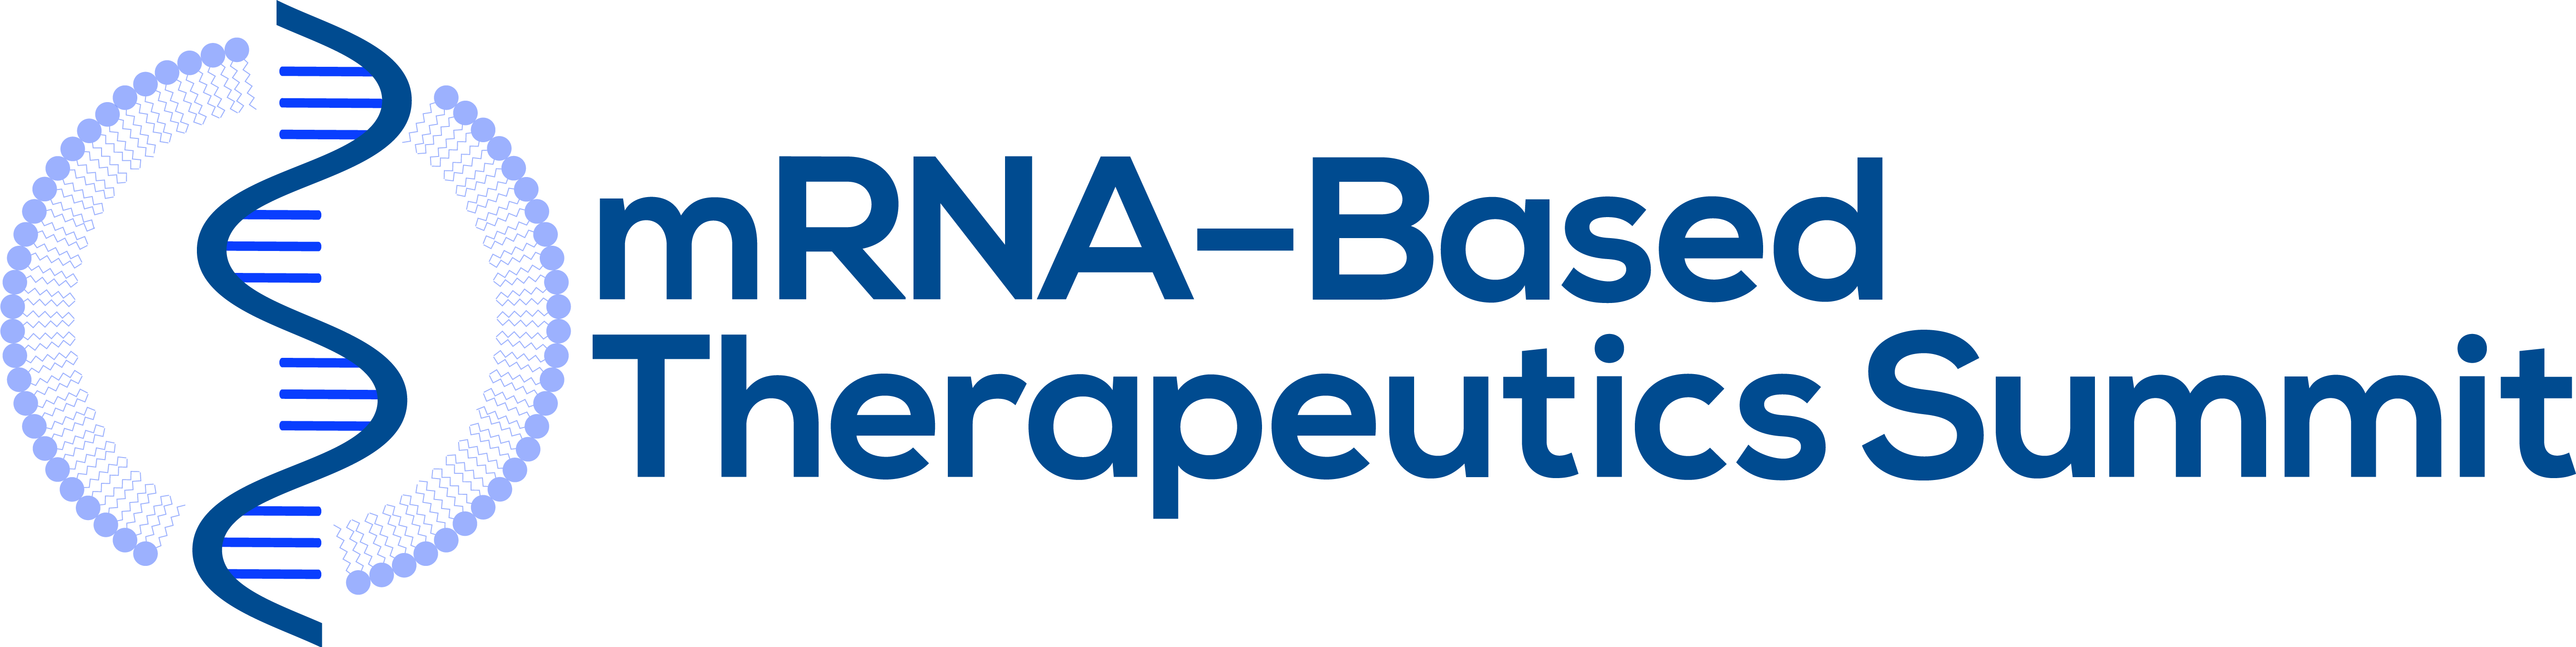 mRNA-Based Therapeutics Summit US logo